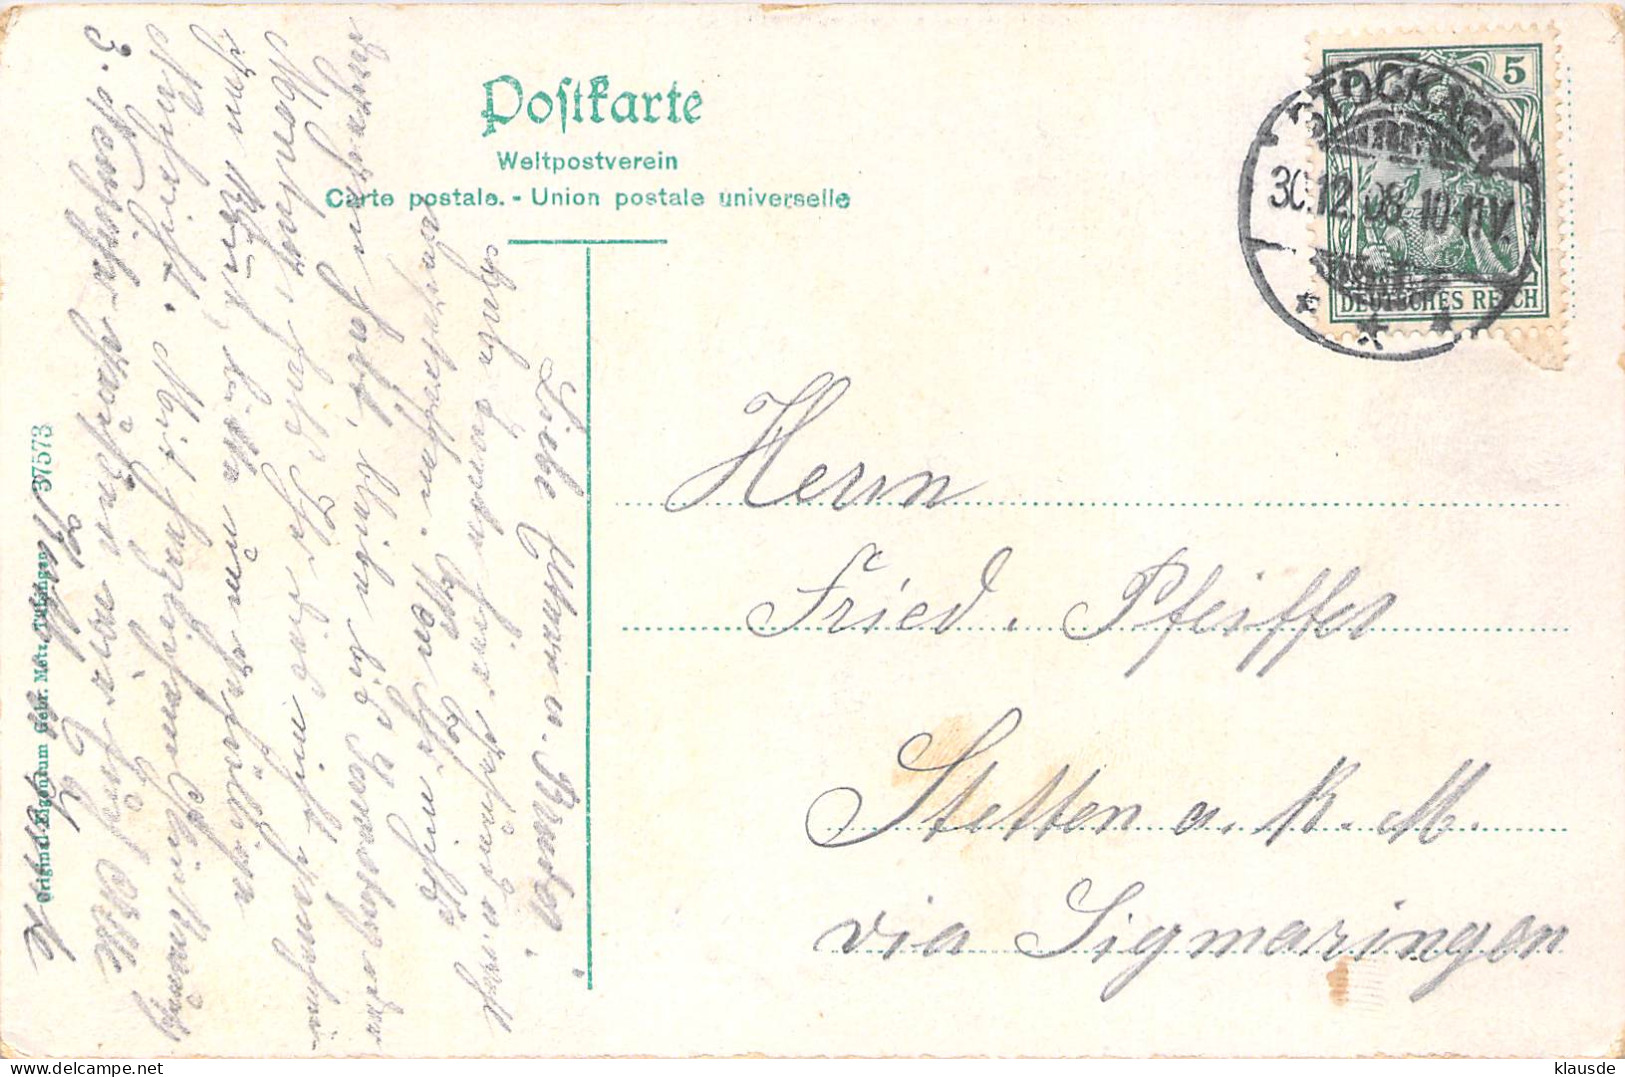 Stockach - Kirchhalde Gel.1909 - Stockach